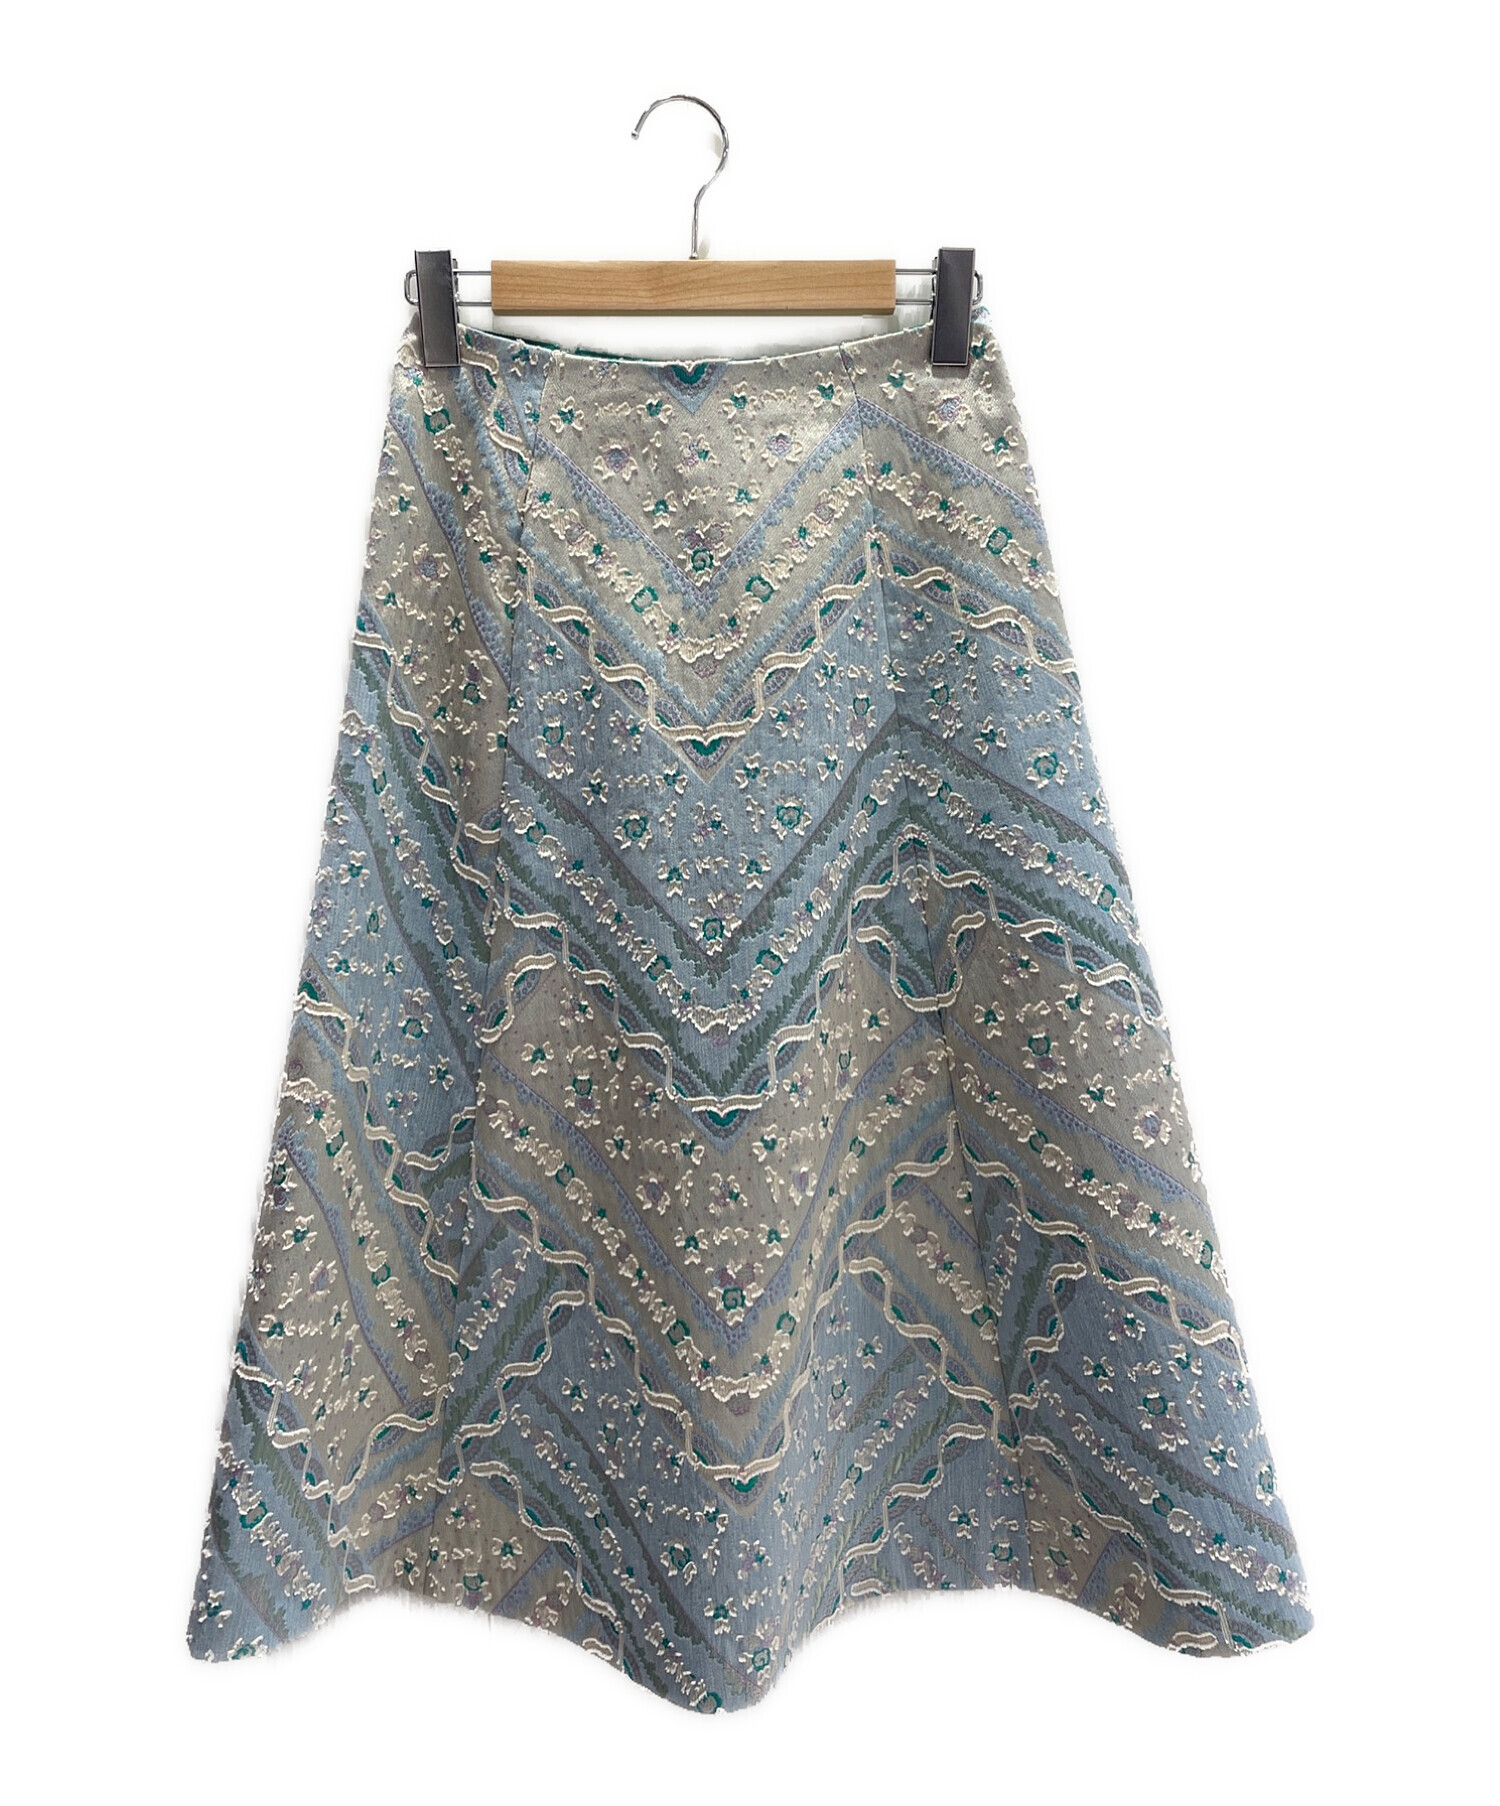 BLAMINK (ブラミンク) フラワージャガードスカート サイズ:36